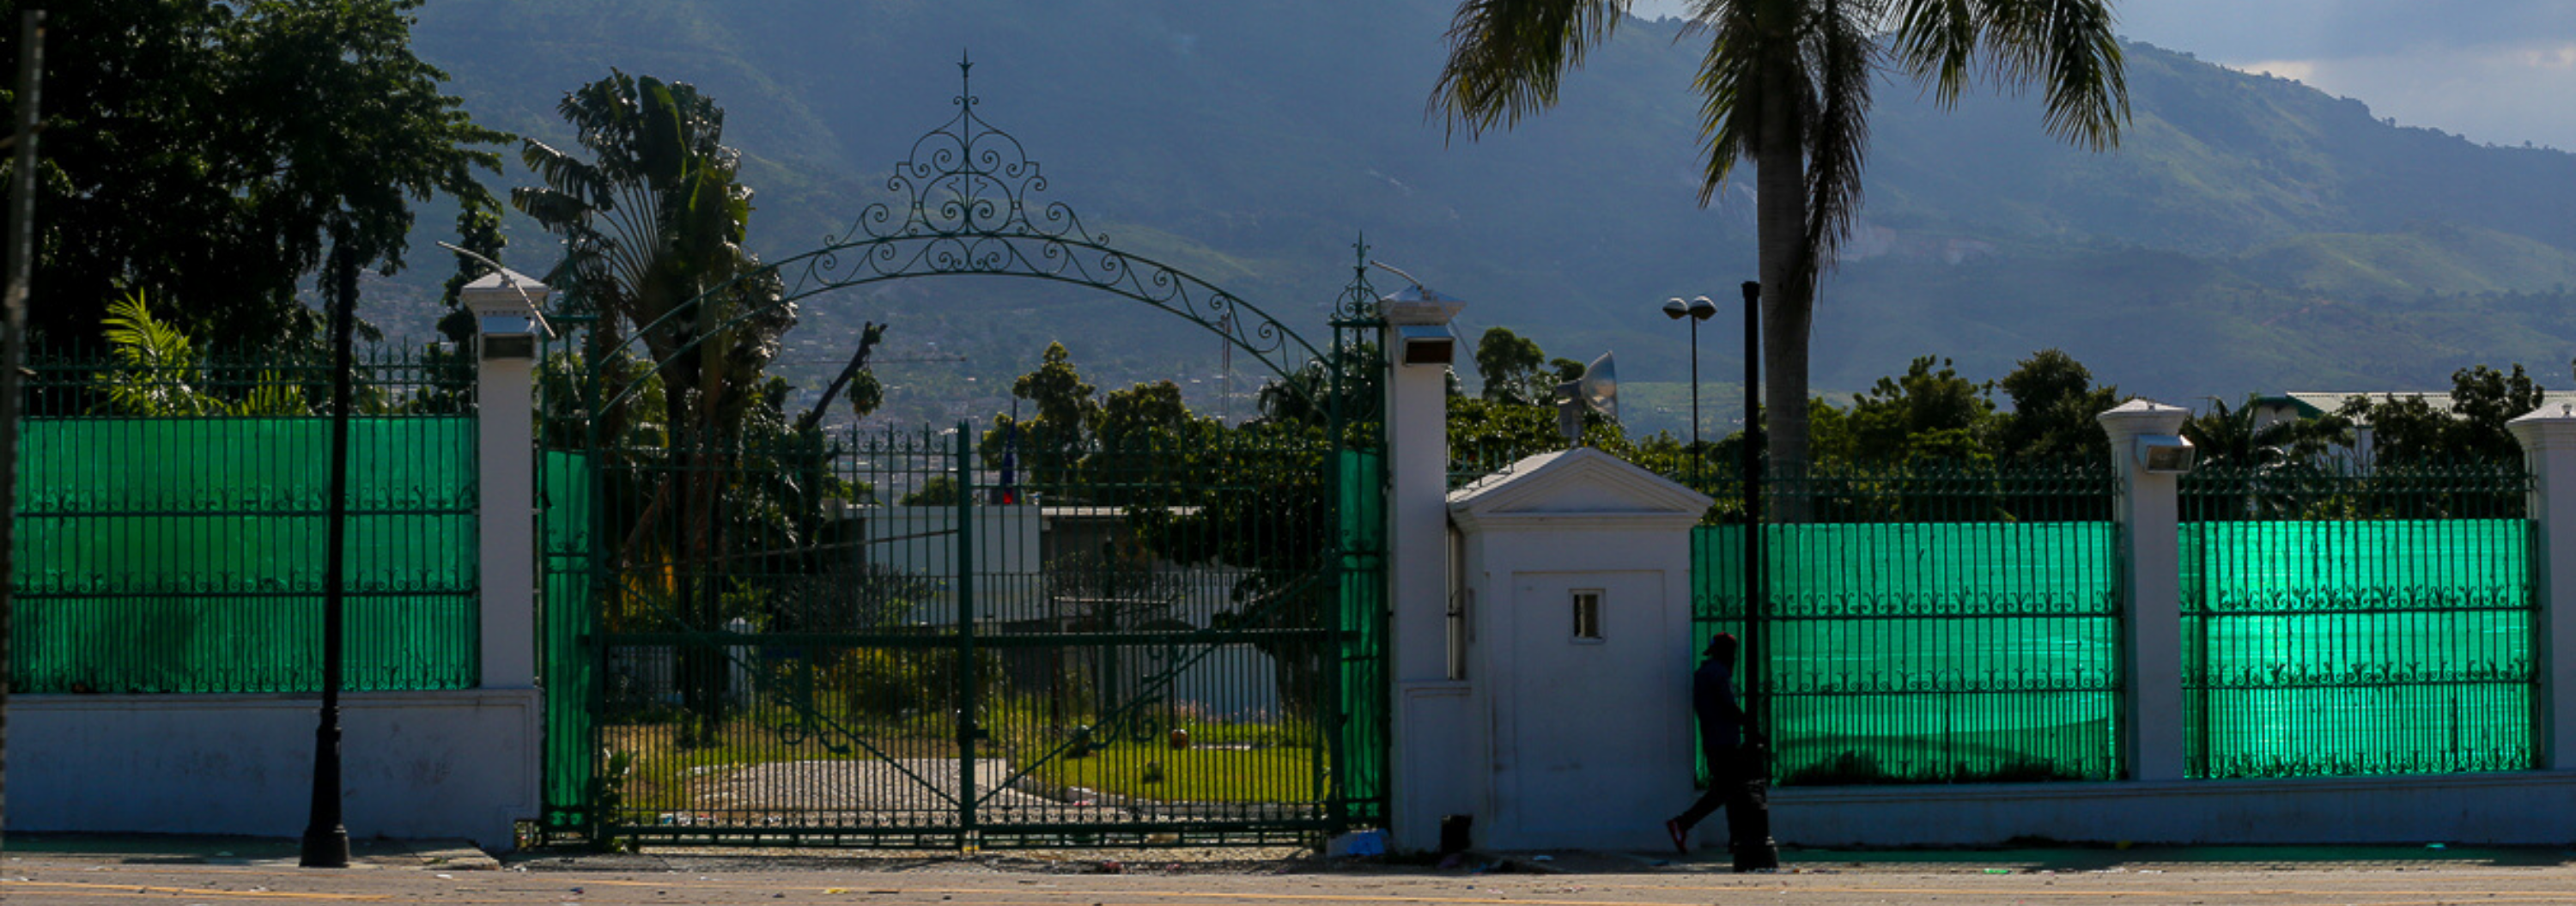 Grounds of national palace. Port-au-Prince, Haiti. Image by Vania André. Haiti, 2019.